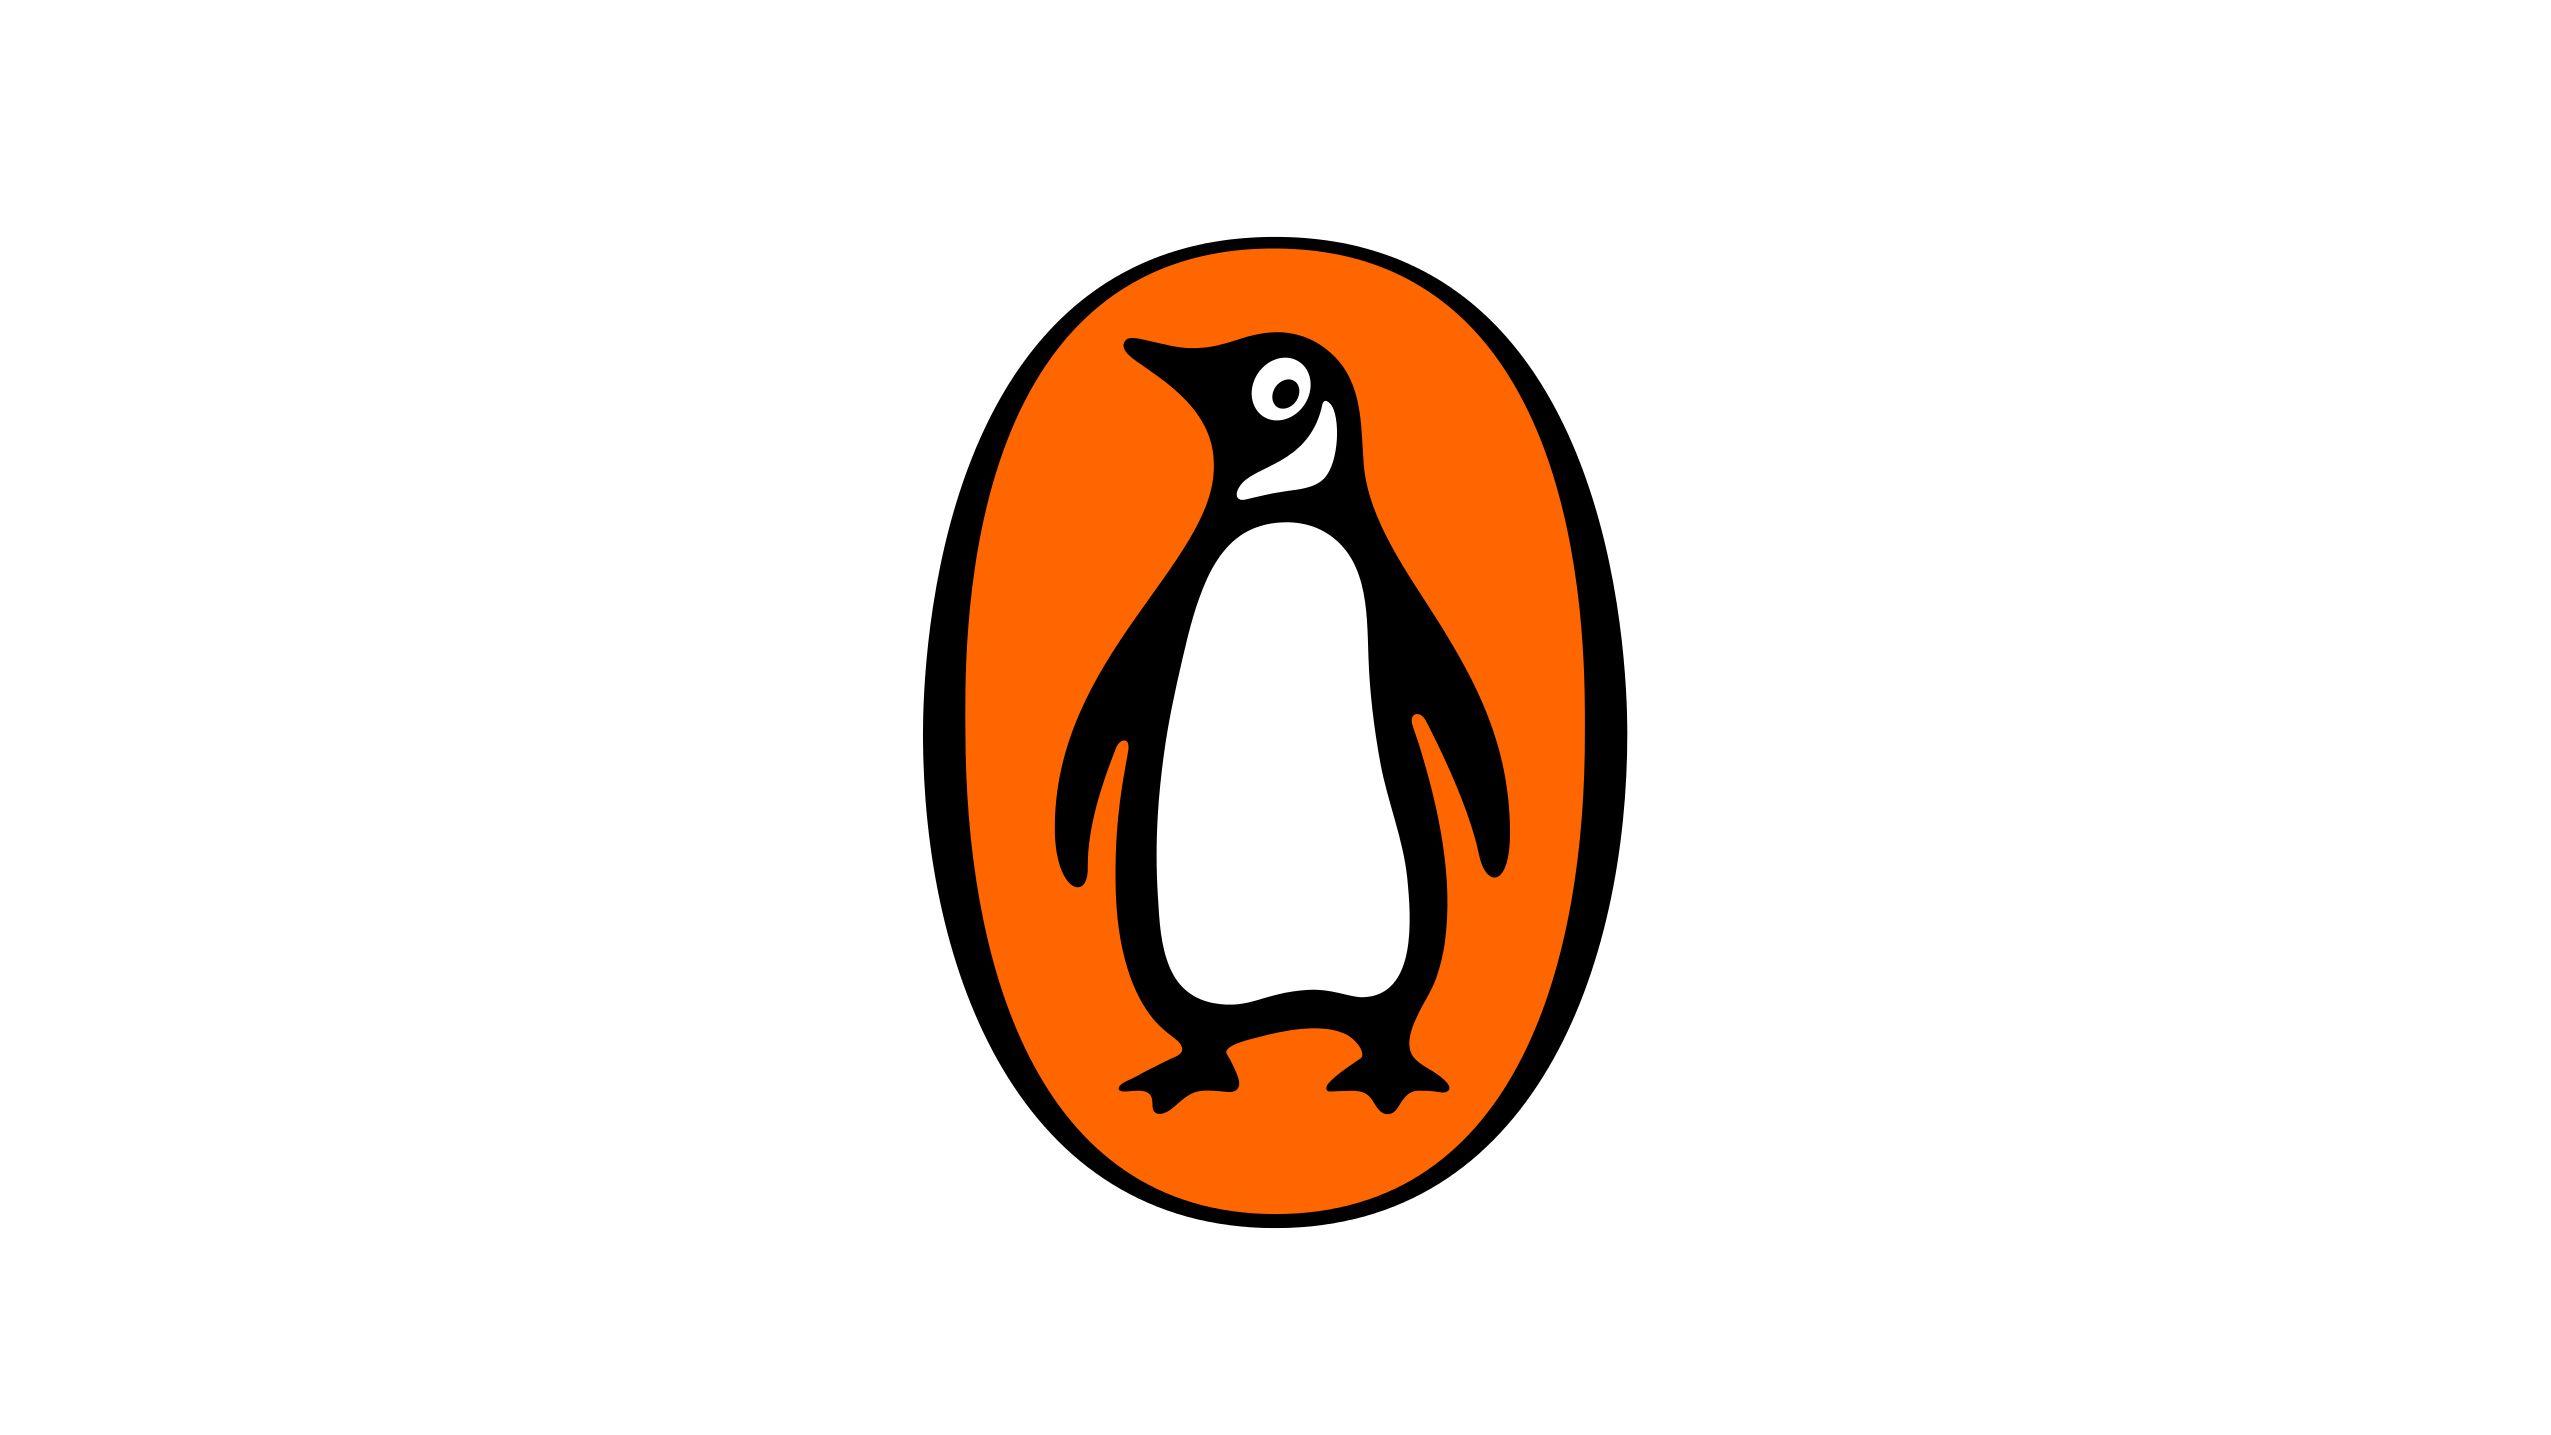 Penguin Logo - Penguin brand's new logo follows 2017 design trends | Creative Bloq